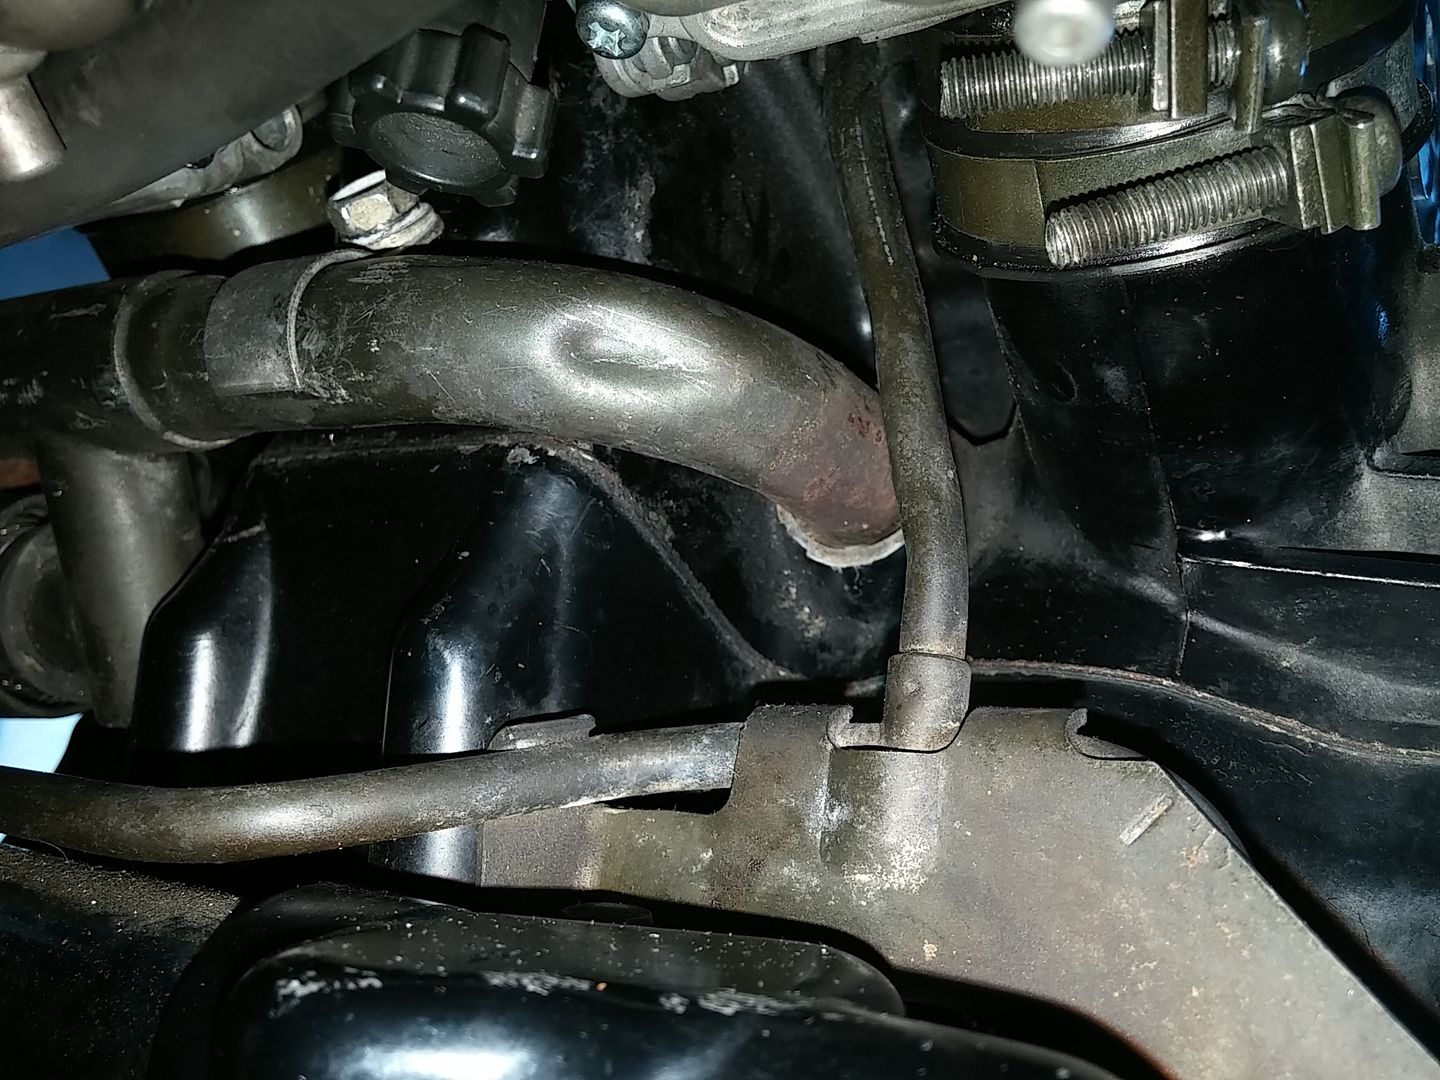 Honda magna coolant leak #4